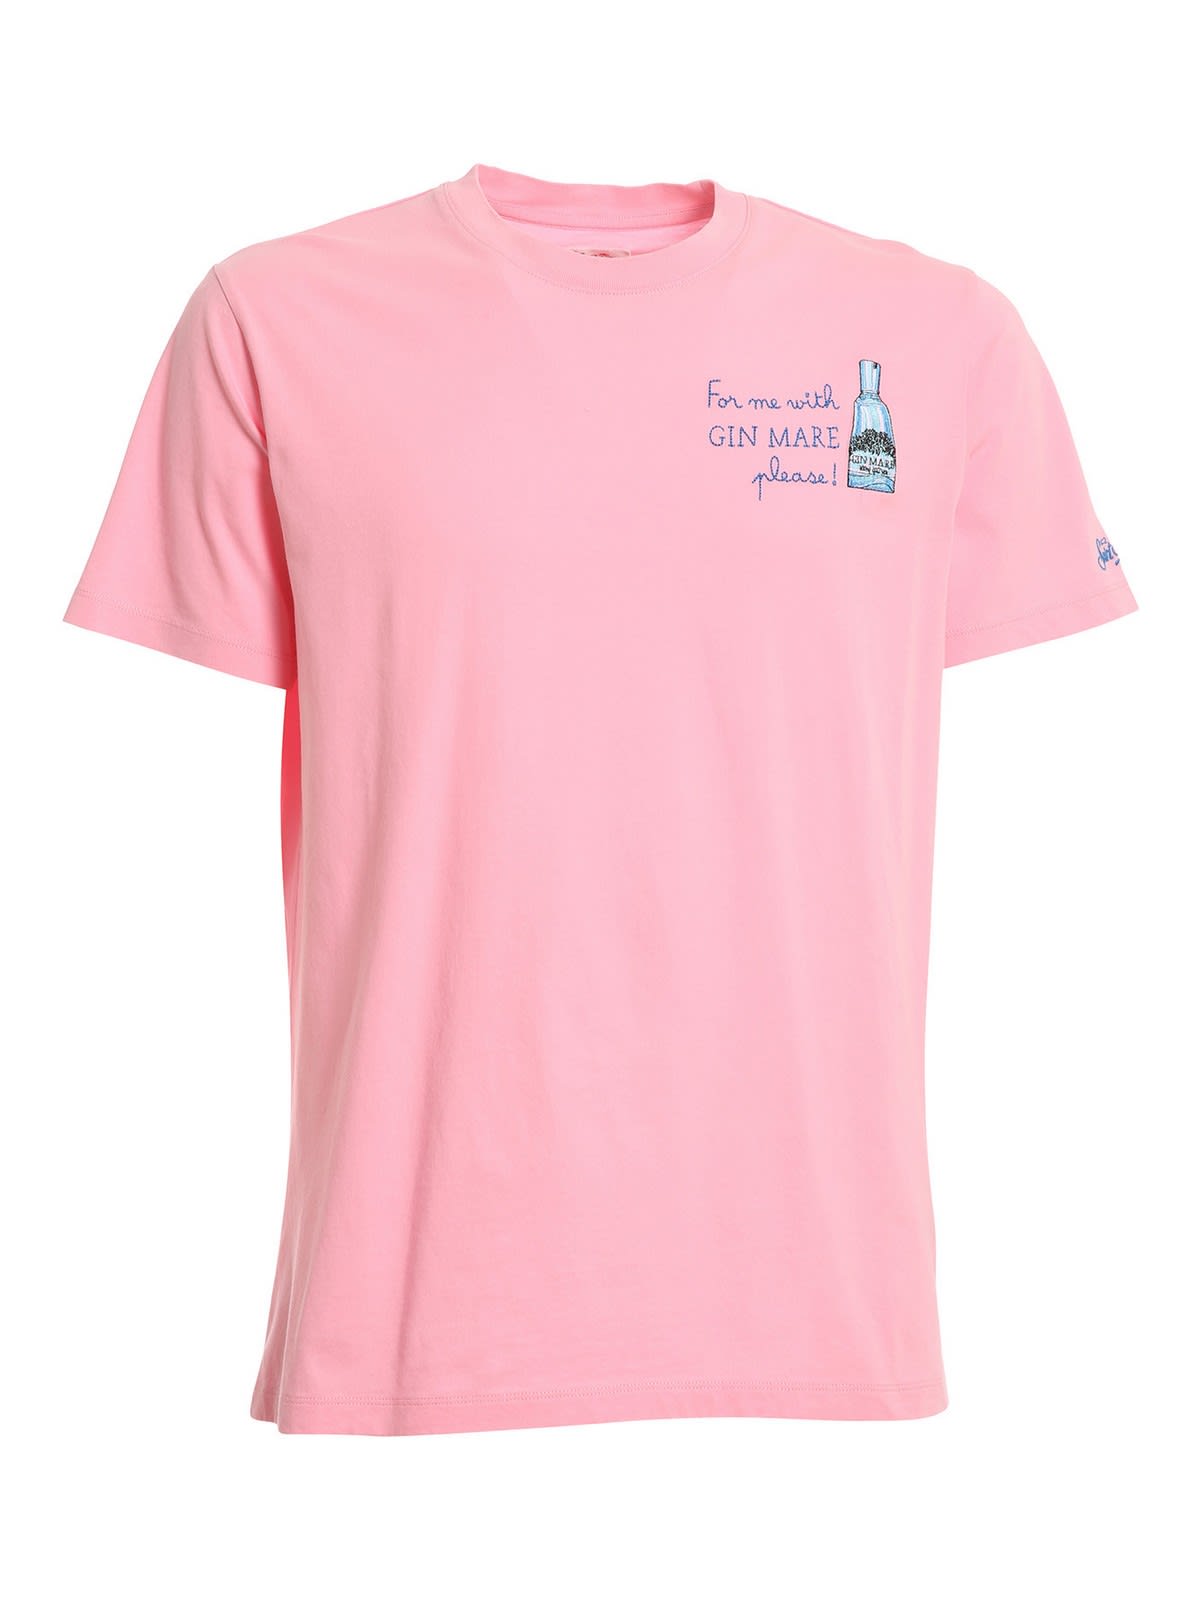 MC2 Saint Barth T-shirt Gin Mare Rosa Tshirtman00467b